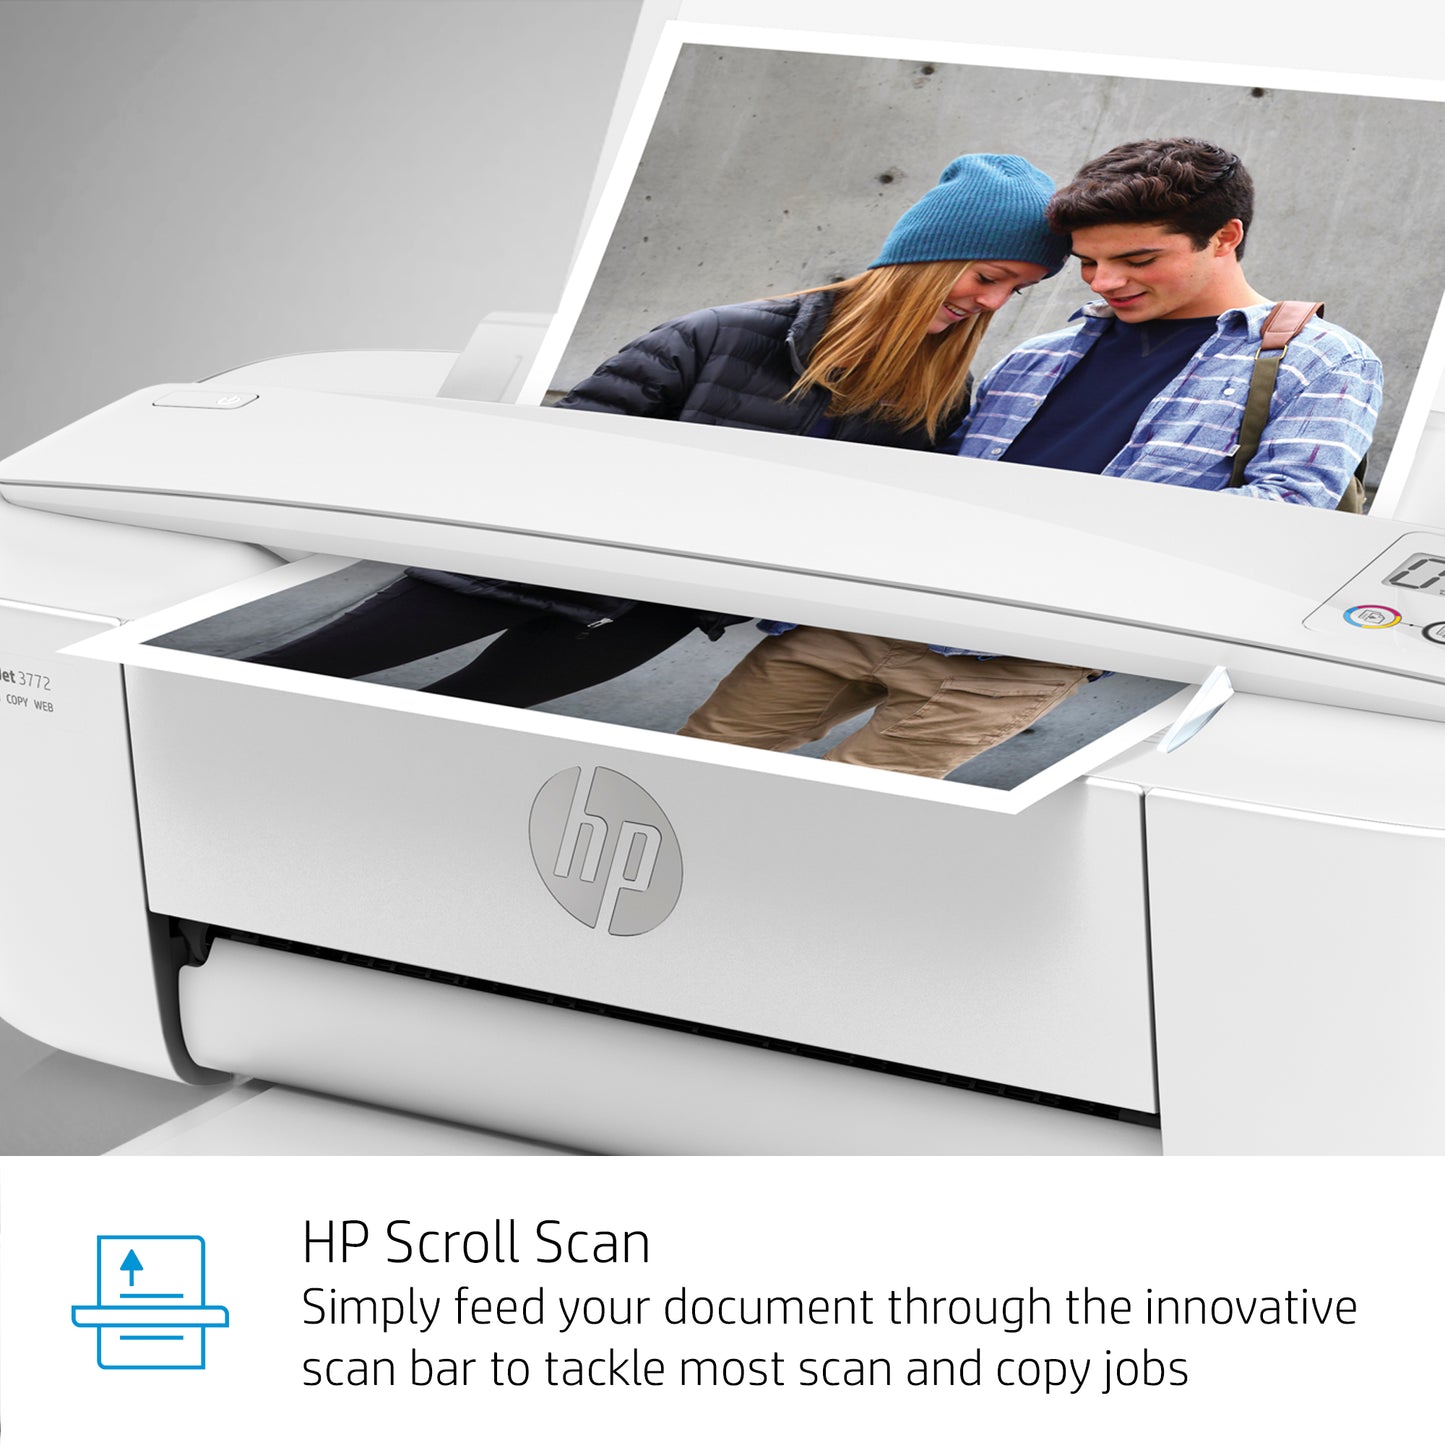 HP DeskJet 3772 All-in-One Wireless Color Inkjet Printer - Instant Ink Ready